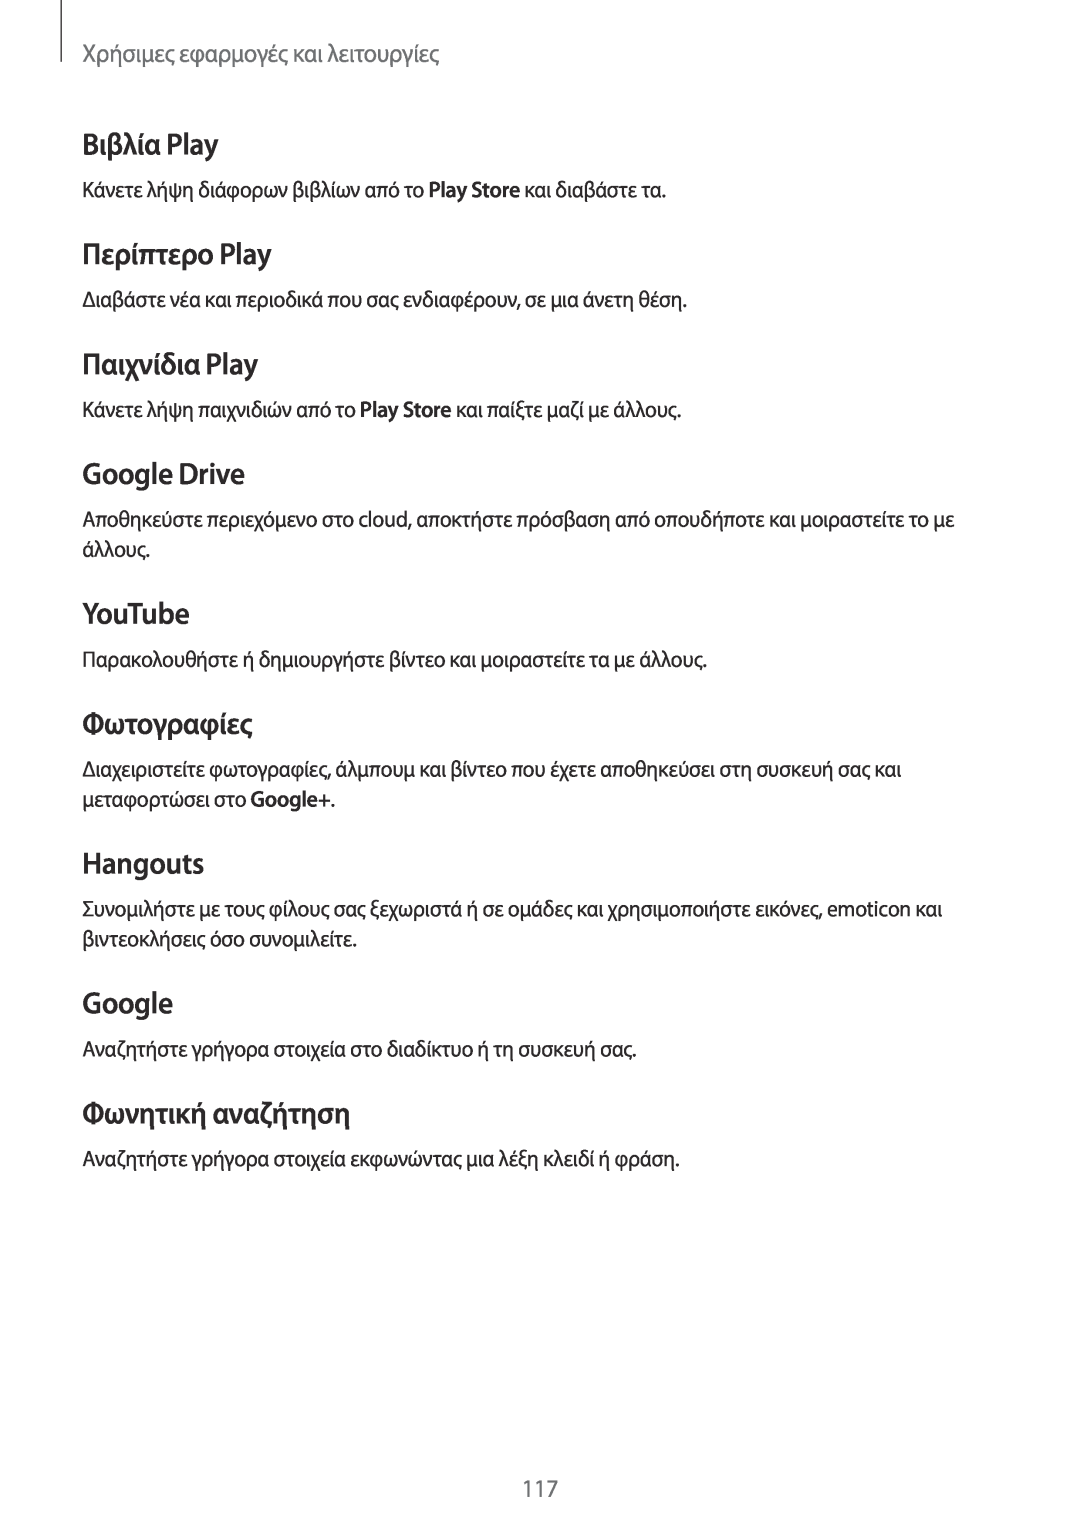 Samsung SM-T705NZWAEUR manual Βιβλία Play, Περίπτερο Play, Παιχνίδια Play, Google Drive, YouTube, Φωτογραφίες, Hangouts 